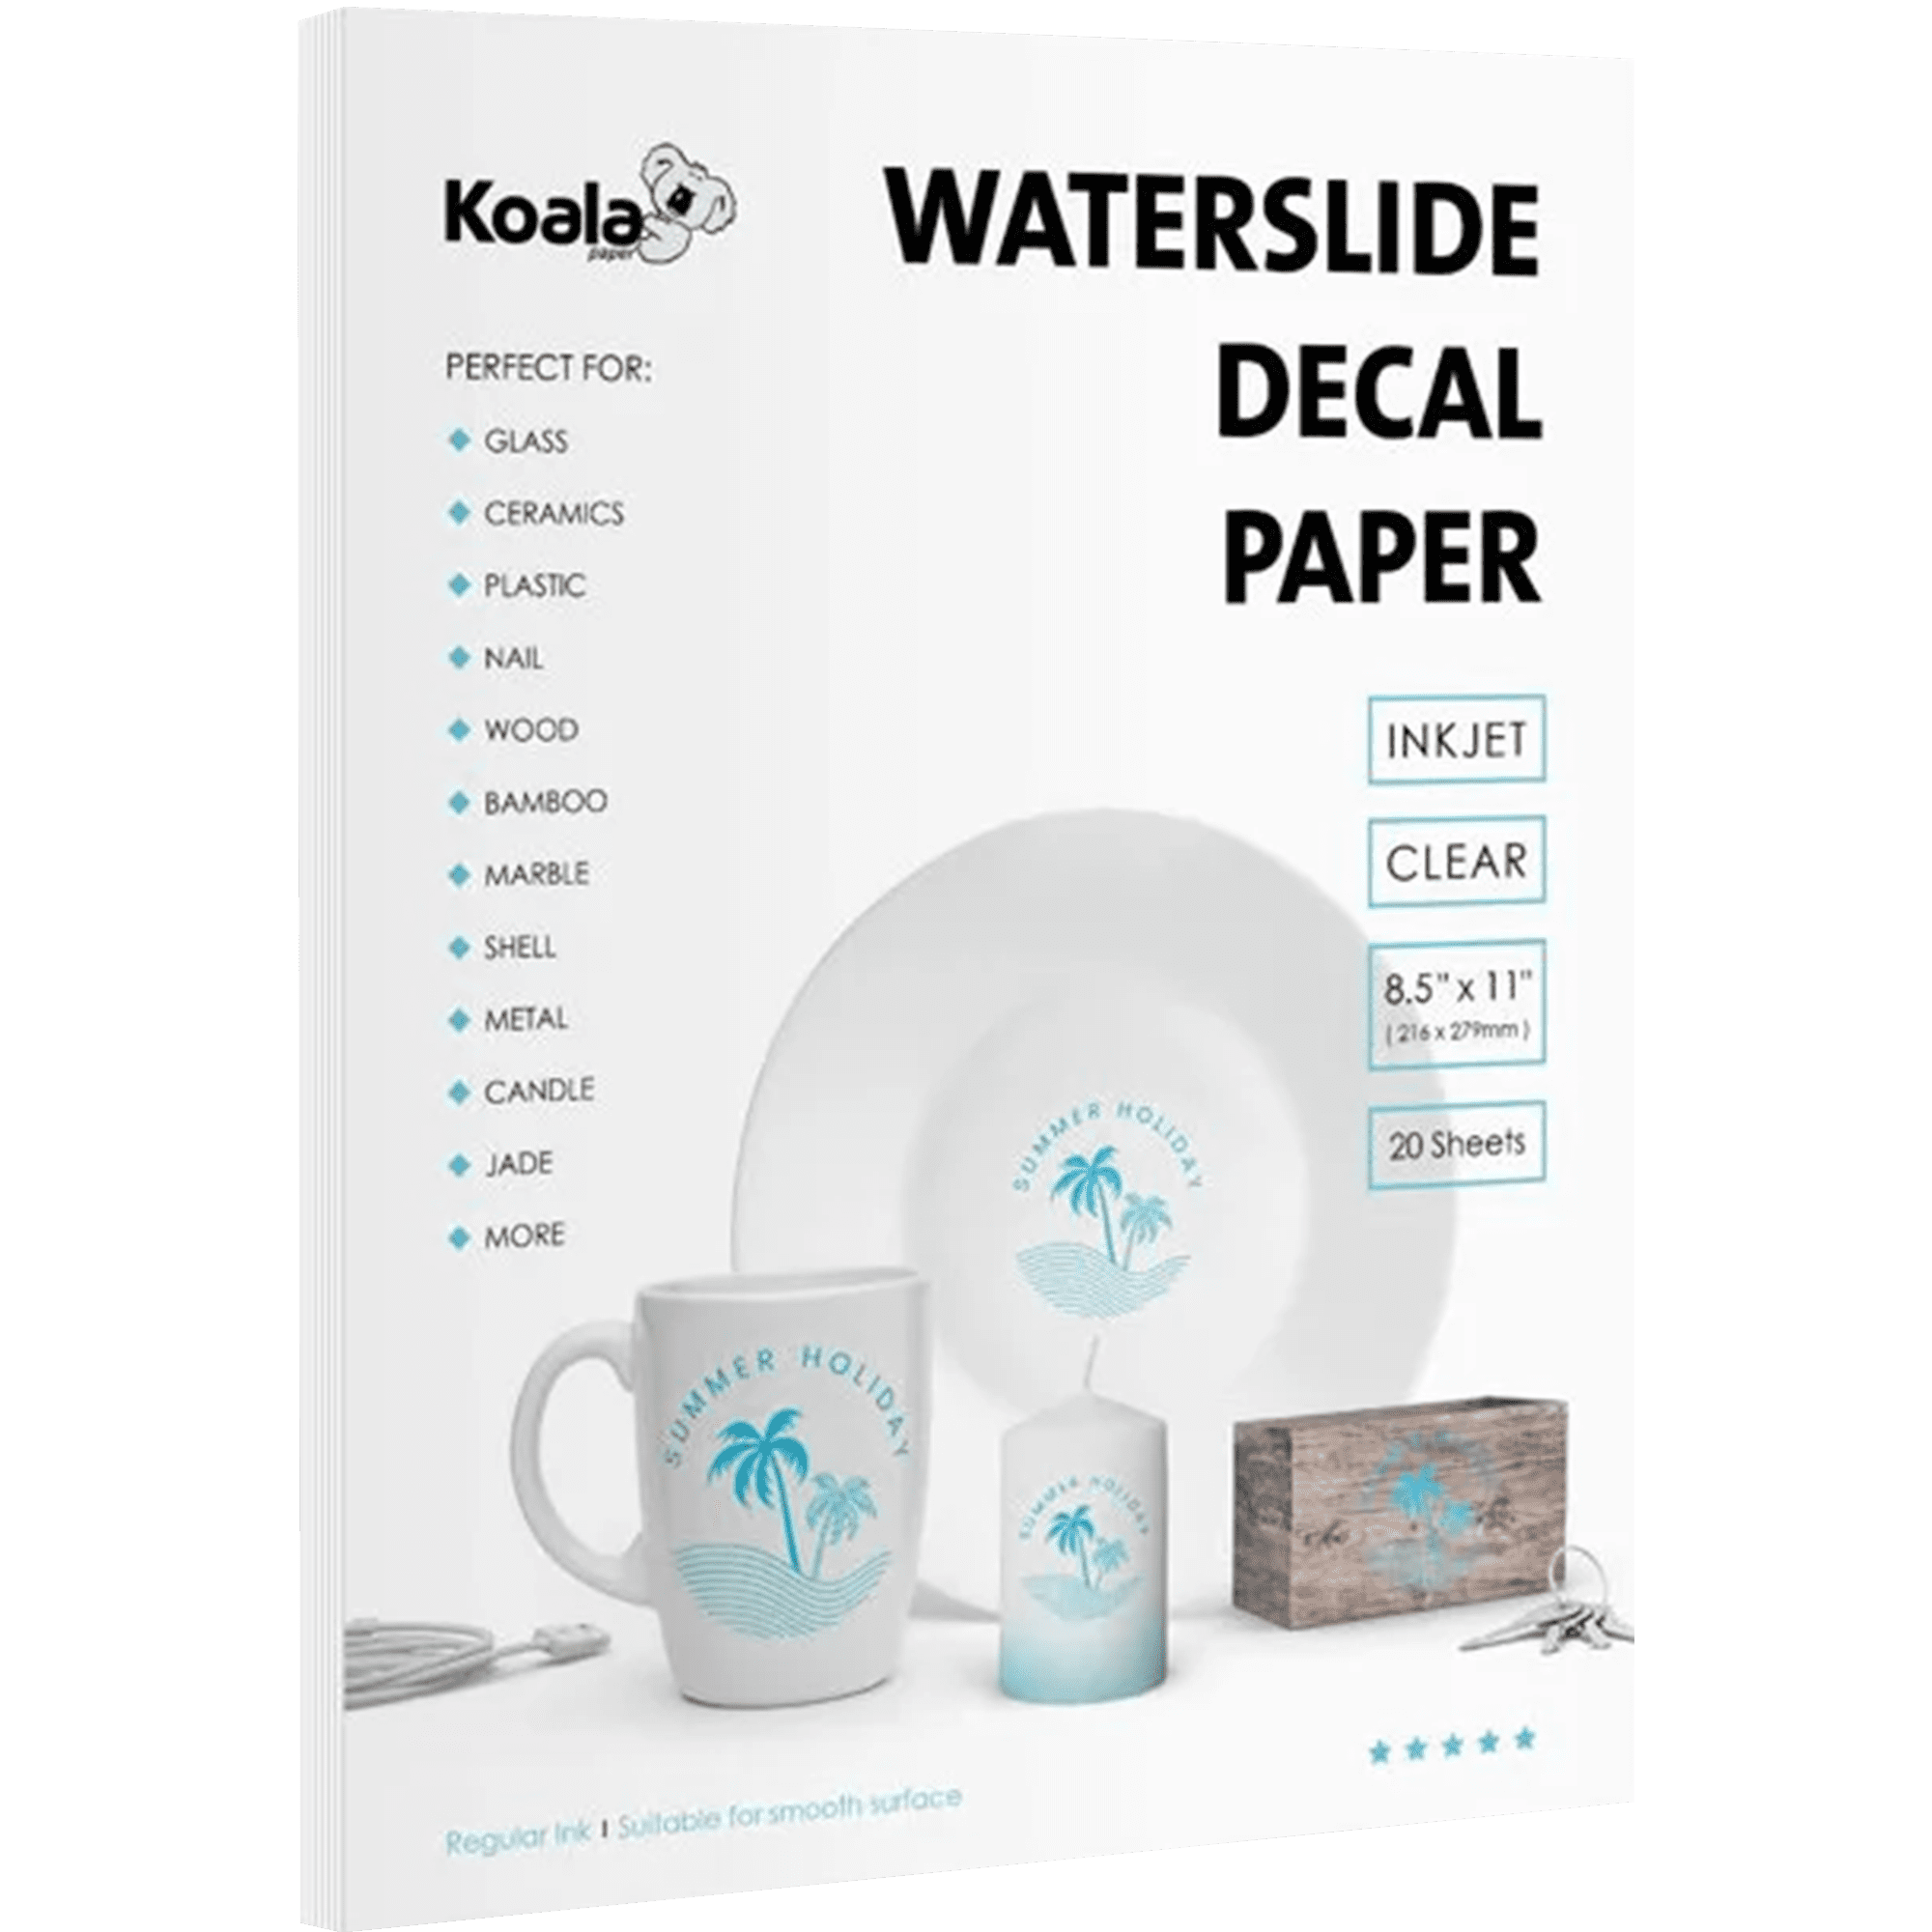 Koala 100 Sheets Waterslide Decal Paper for Inkjet Printer - WHITE 8.5x11  Inch Water Slide Transfer Paper for DIY Tumblers, Mugs, Glass, Ceramics